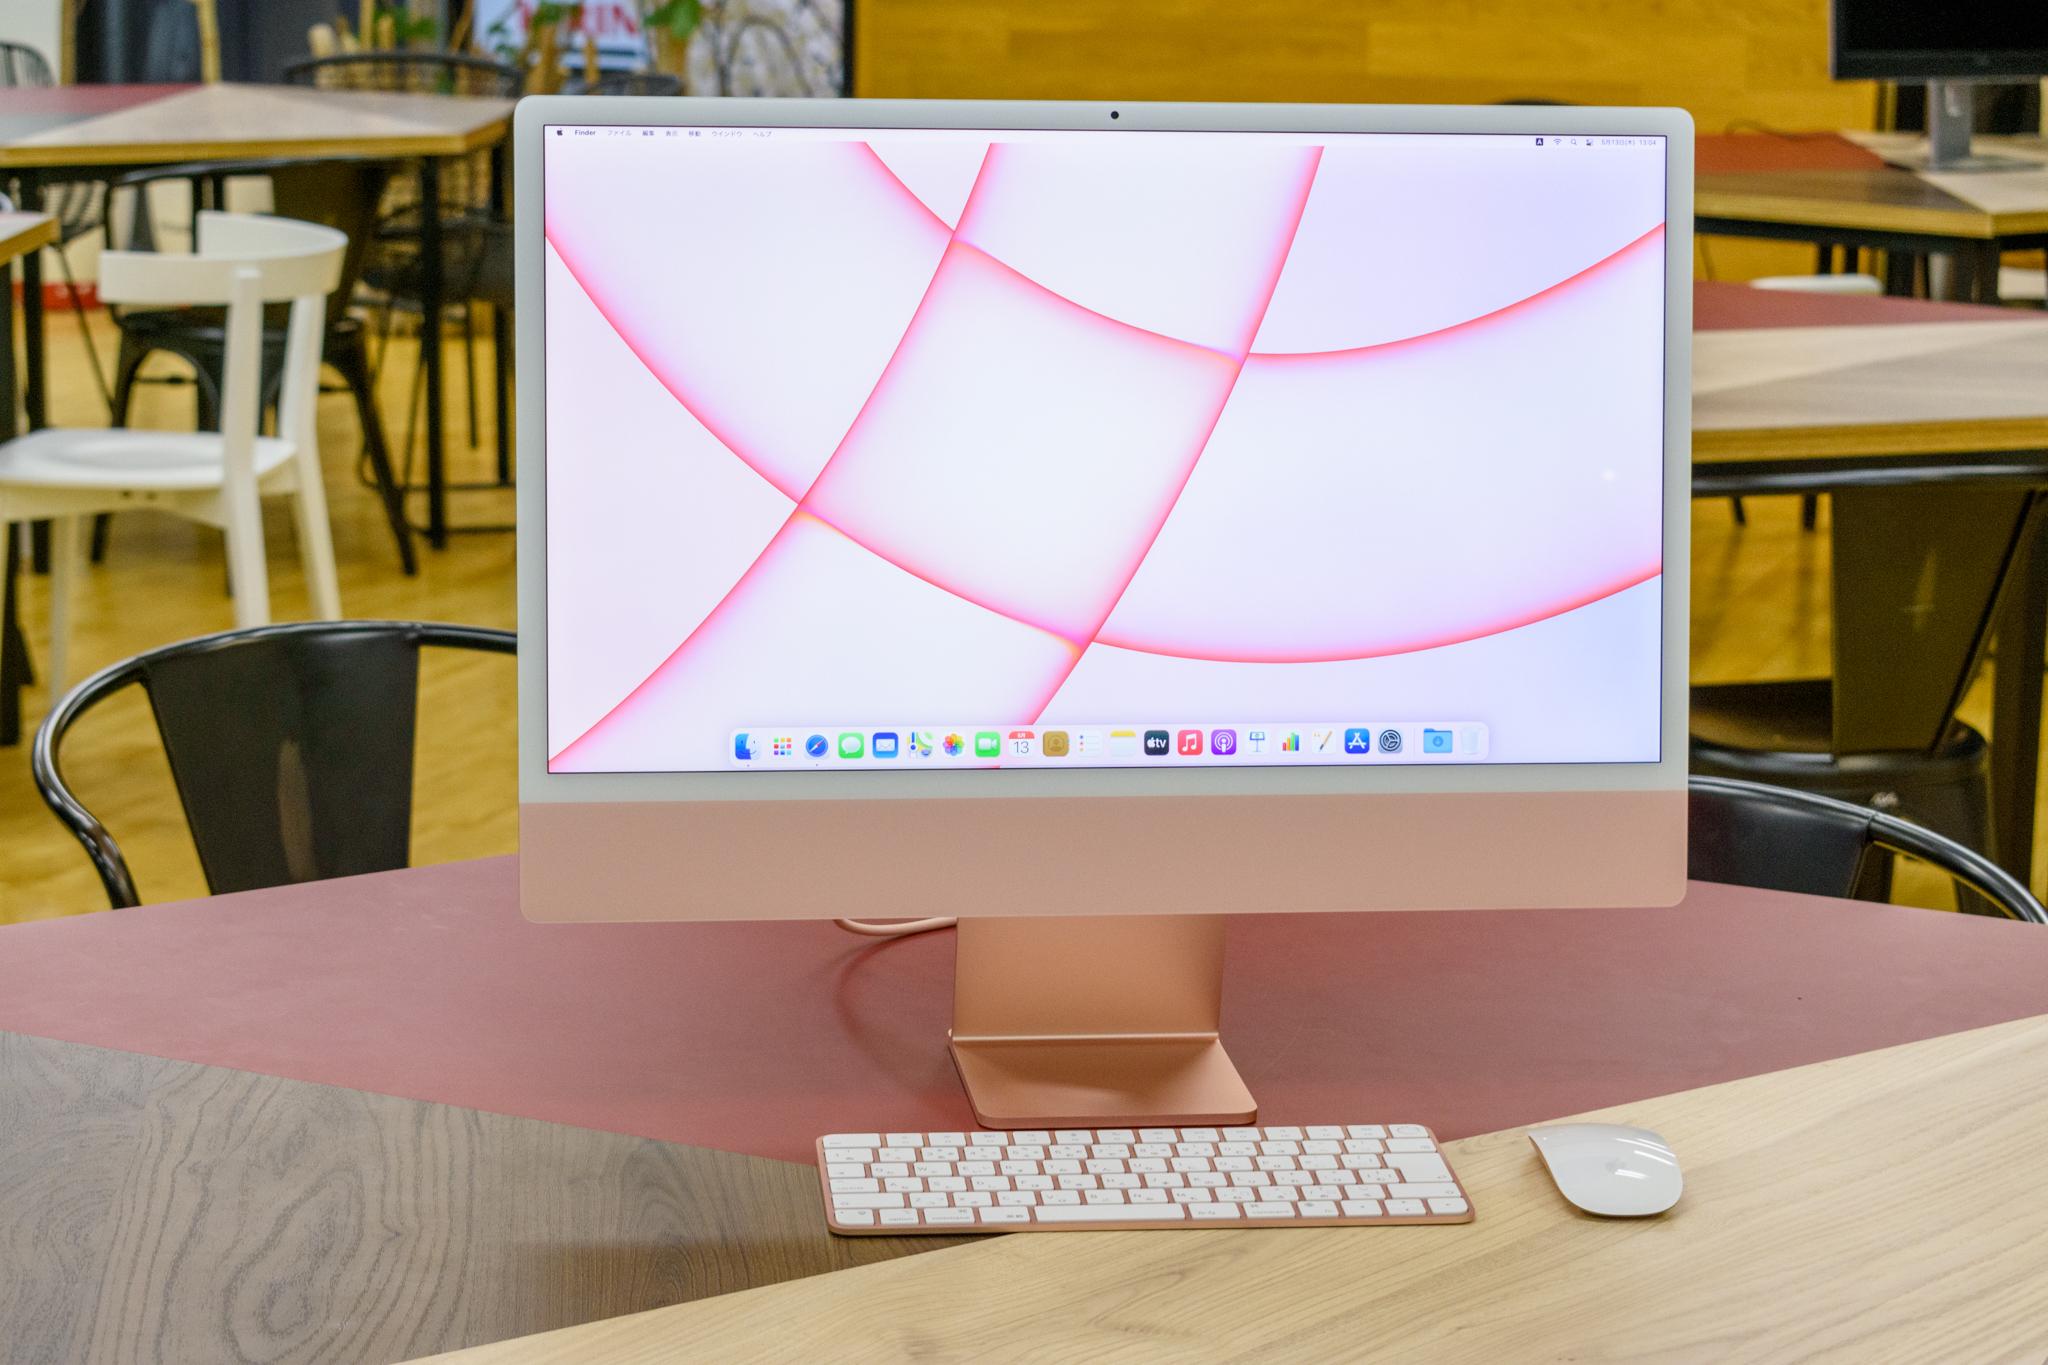 iMac(21.5-inch,Late 2012)